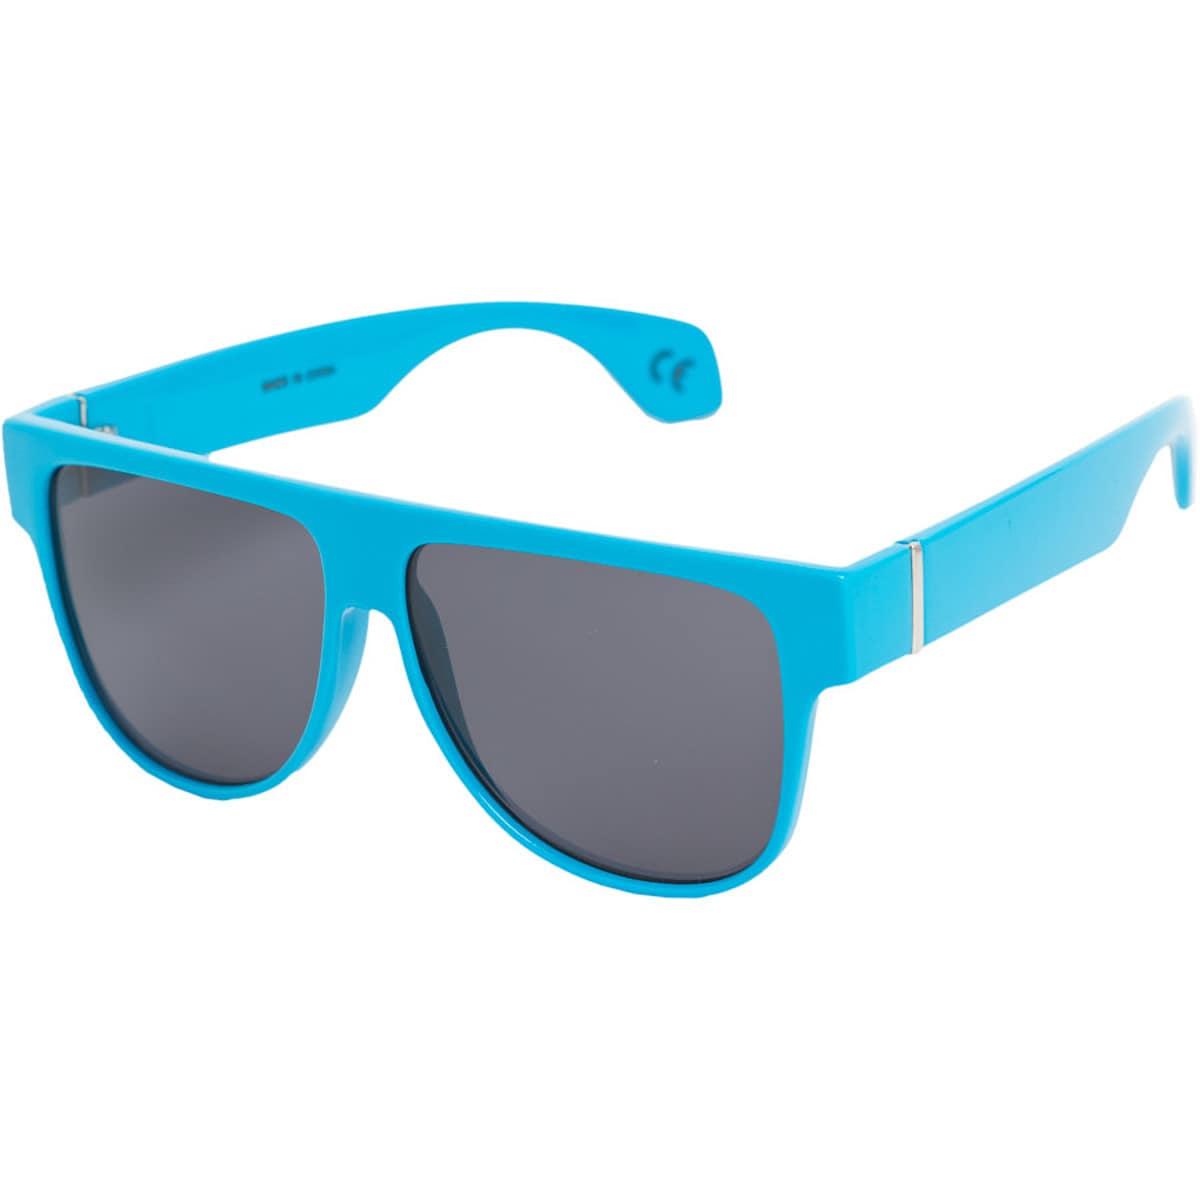 Spectra Sunglasses - Accessories